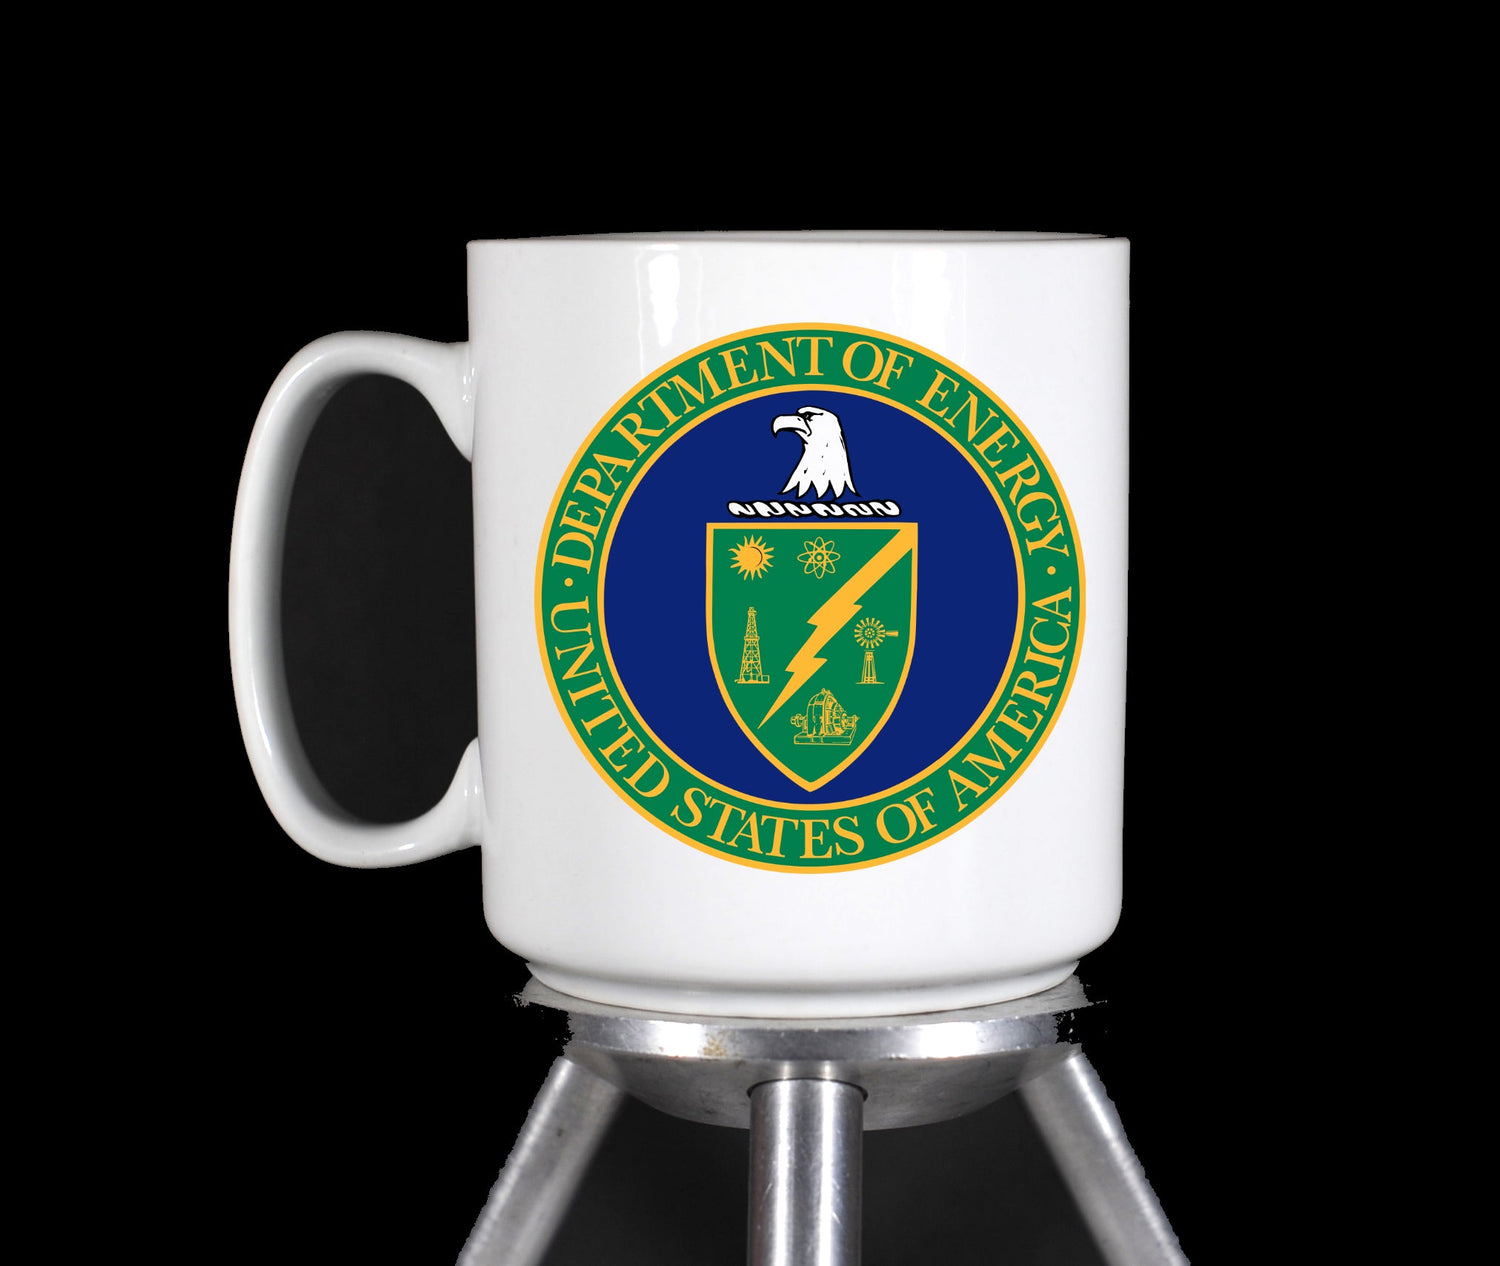 US Department of Energy Coffee Mug by TheGlassyLass.com